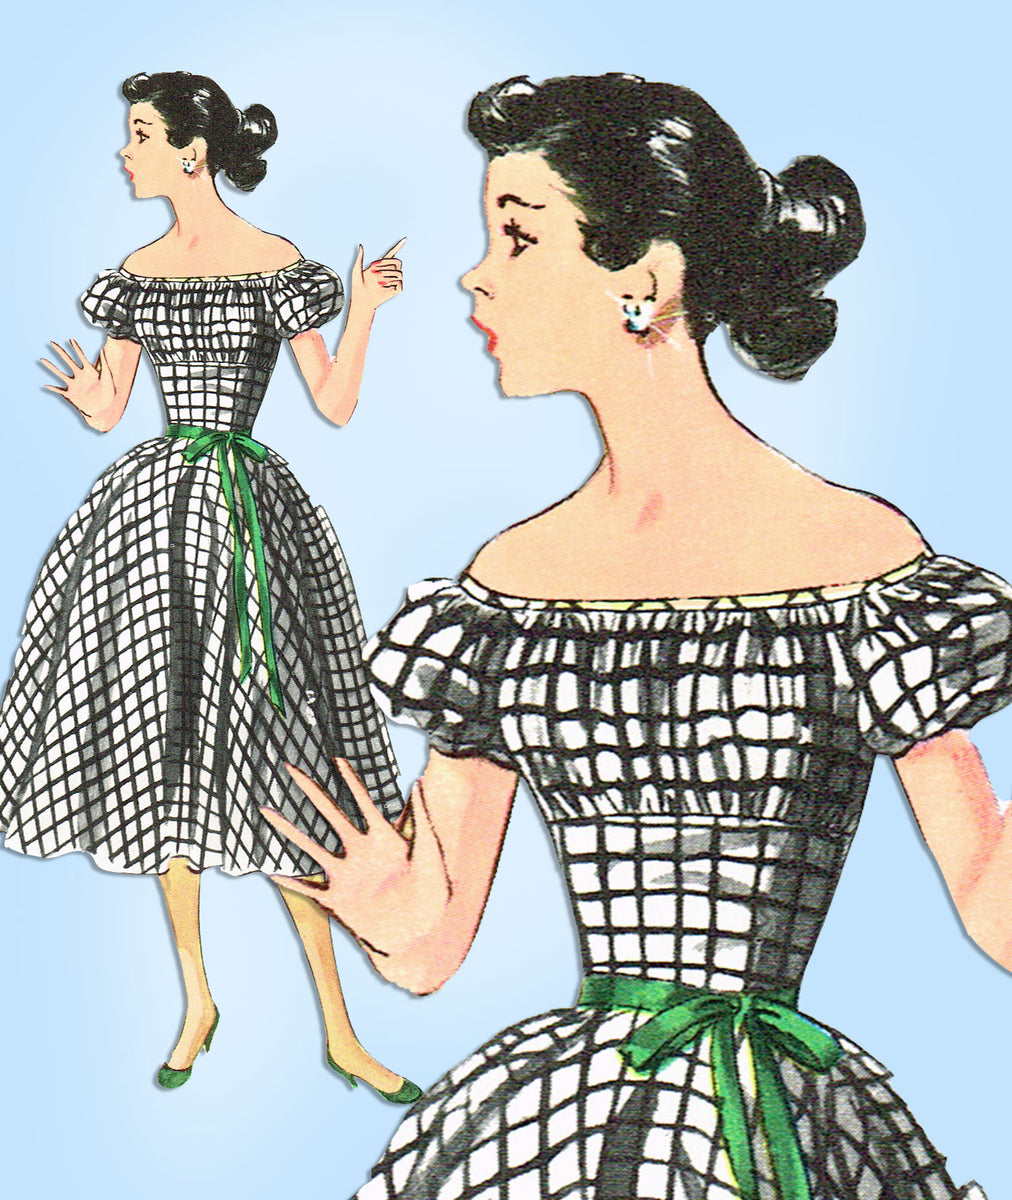 Vintage 1950s Simplicity Sewing Pattern 1795 Bust 35 Size 15 Fit 'n Flare  Dress & Huge Cumberbund Teen Rockabilly Rock 'n Roll Prom 